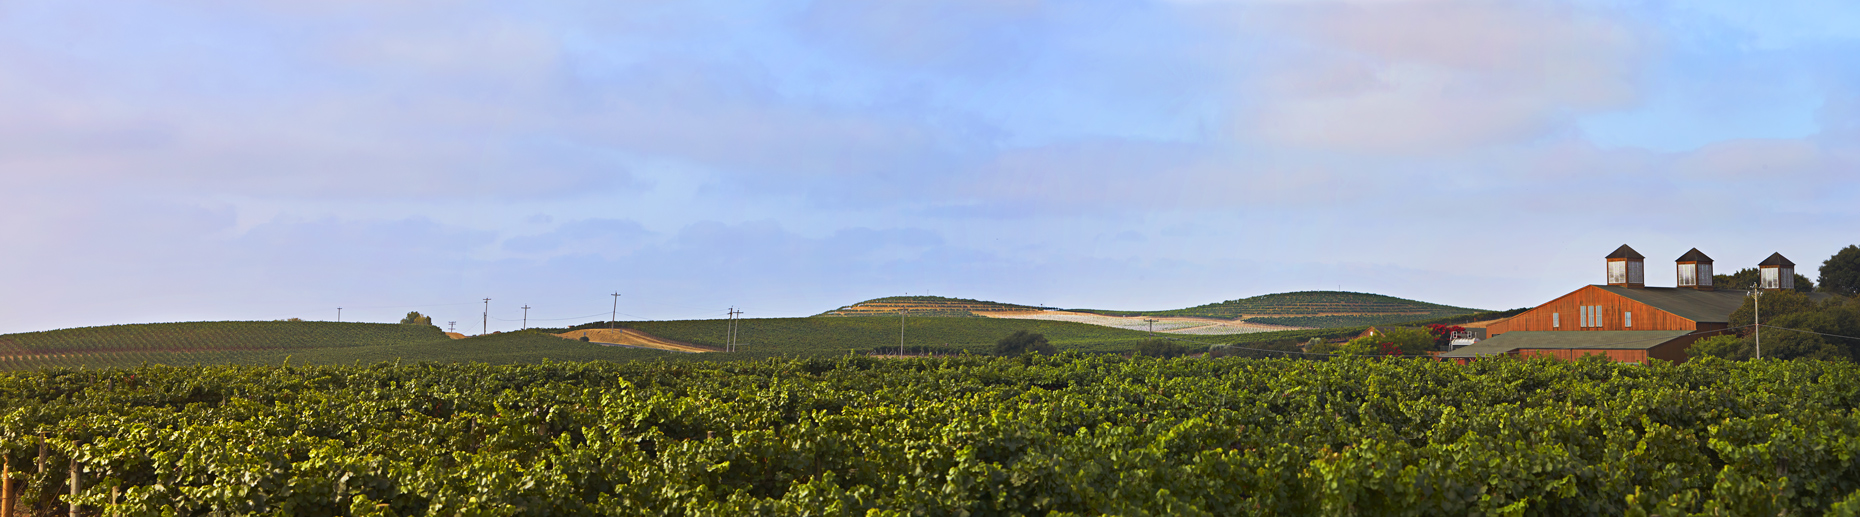 Bouchaine Winery Vineyards Landscape Photography by Brandon McGanty